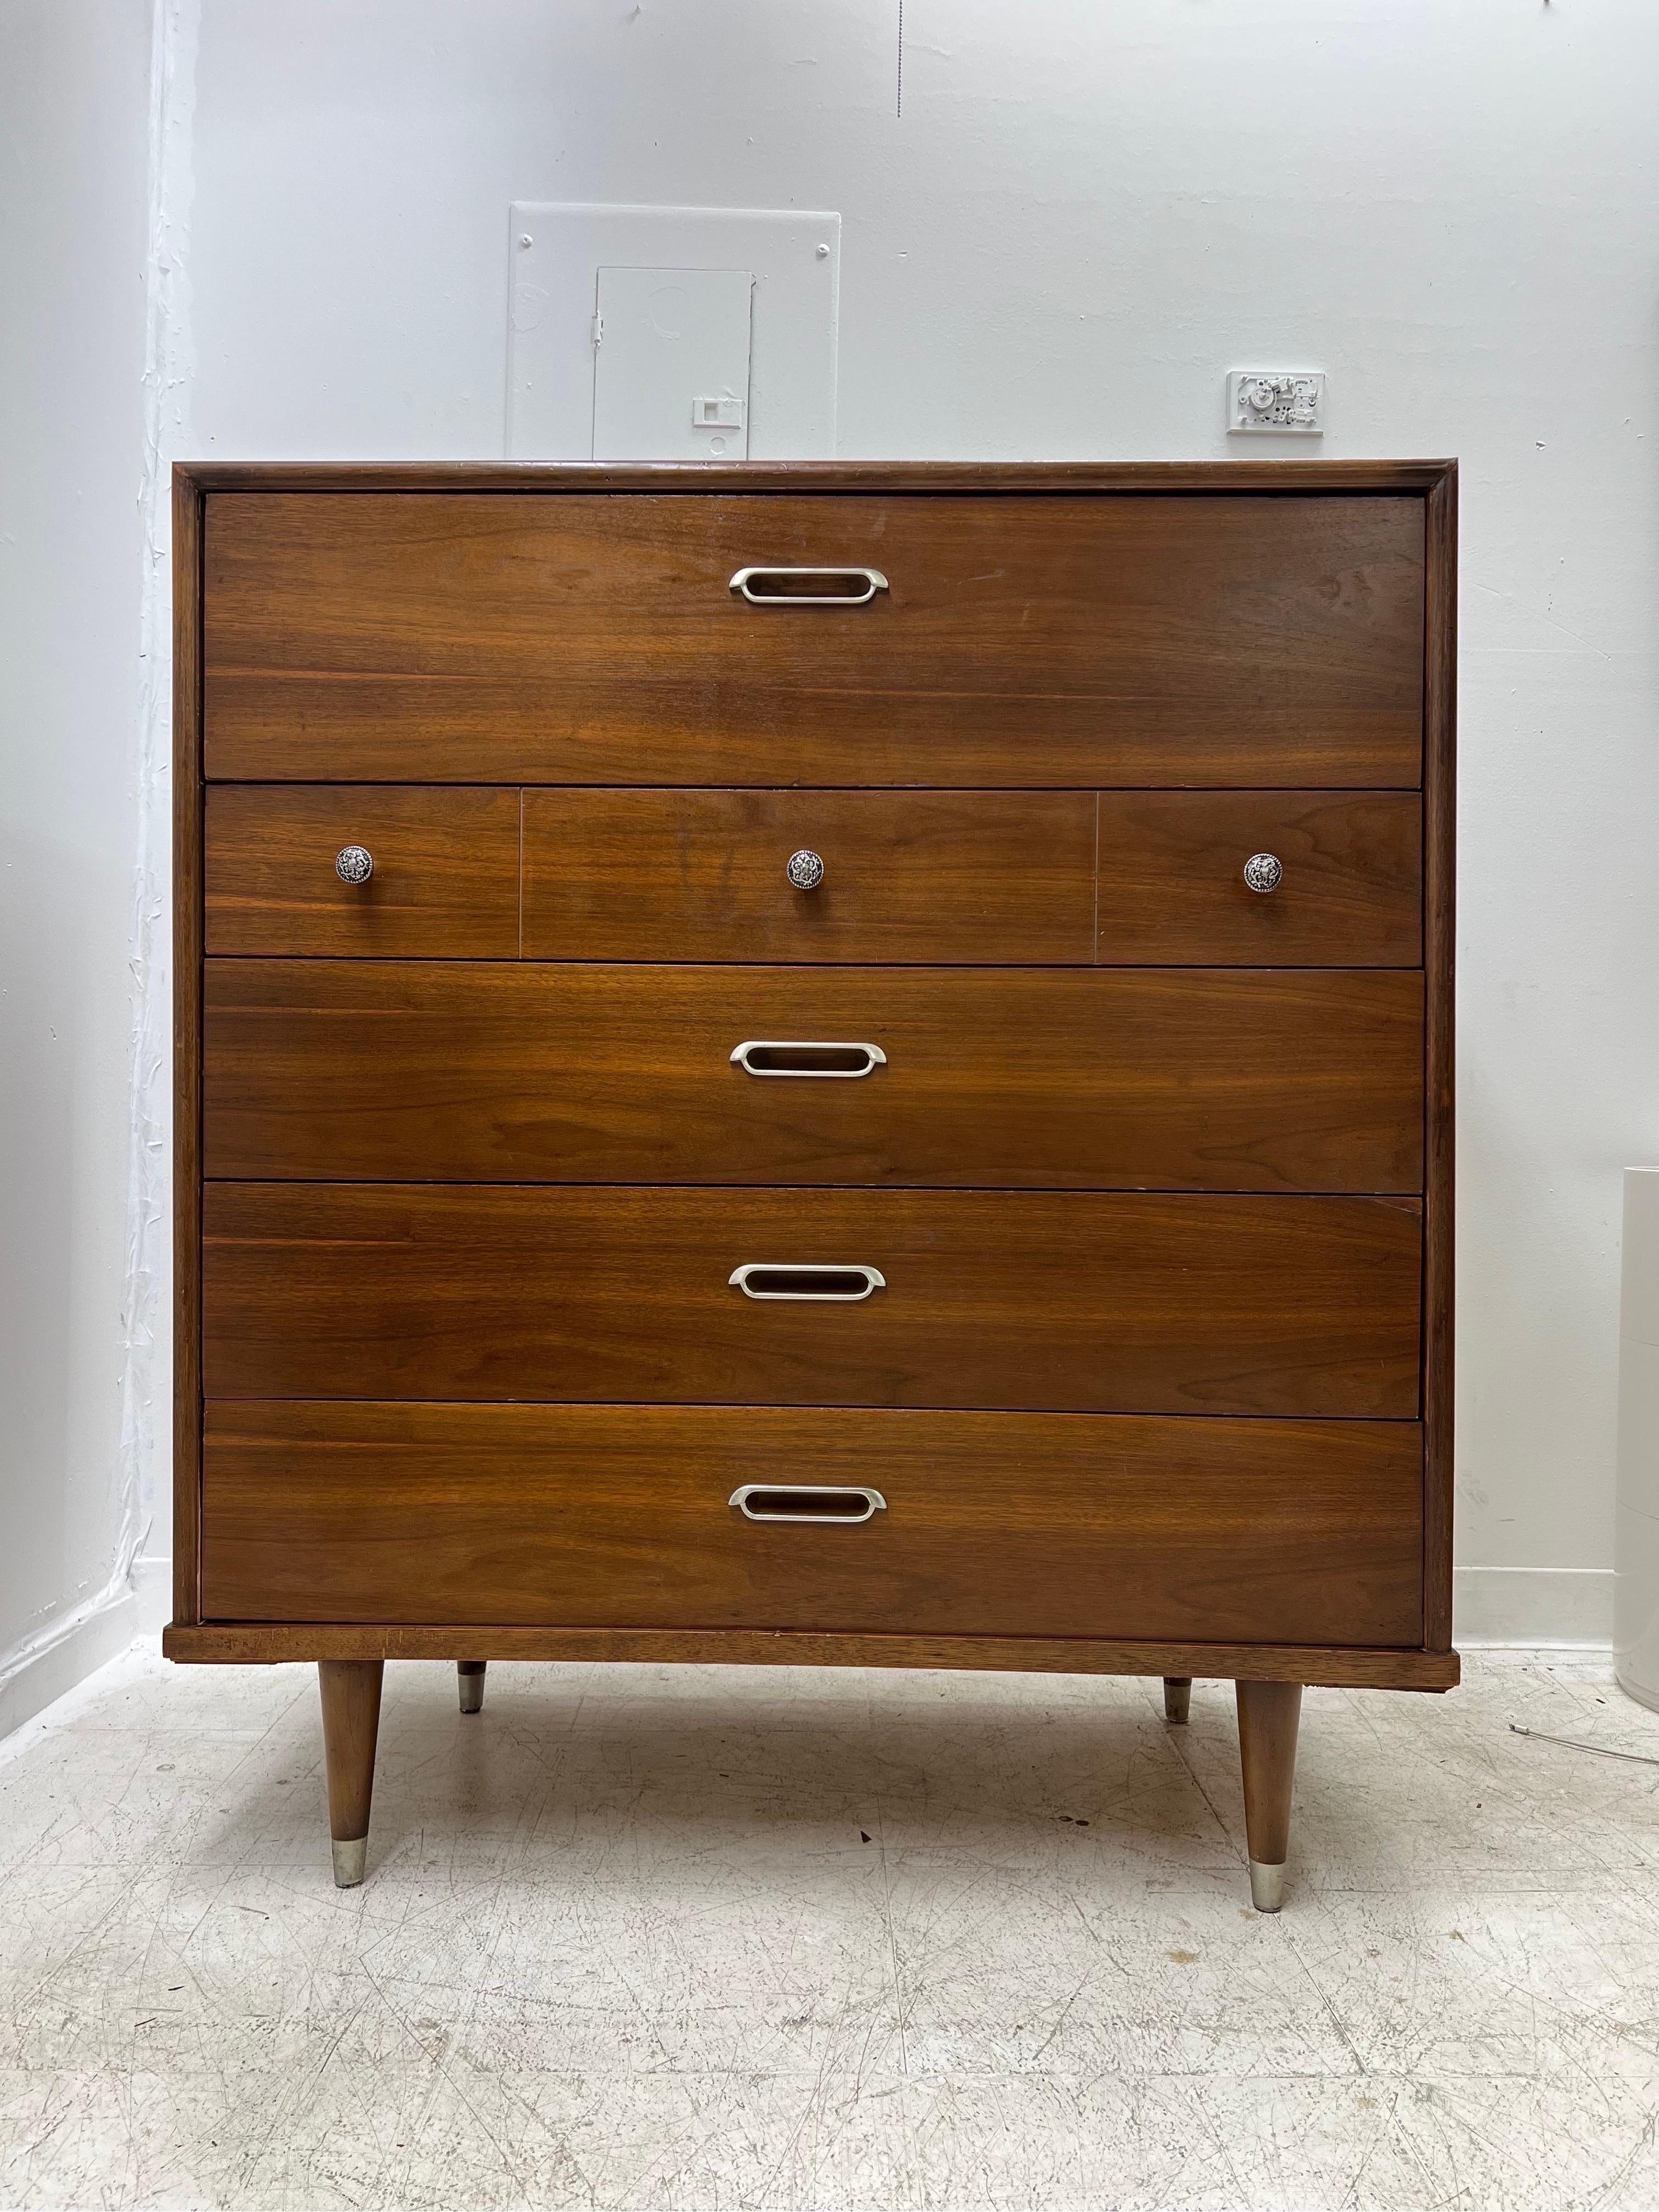 Mid Century Modern B.P John Dresser Dovetail Drawers Cabinet Storage 

Dimensions. 40 W ; 19 D ; 45 H